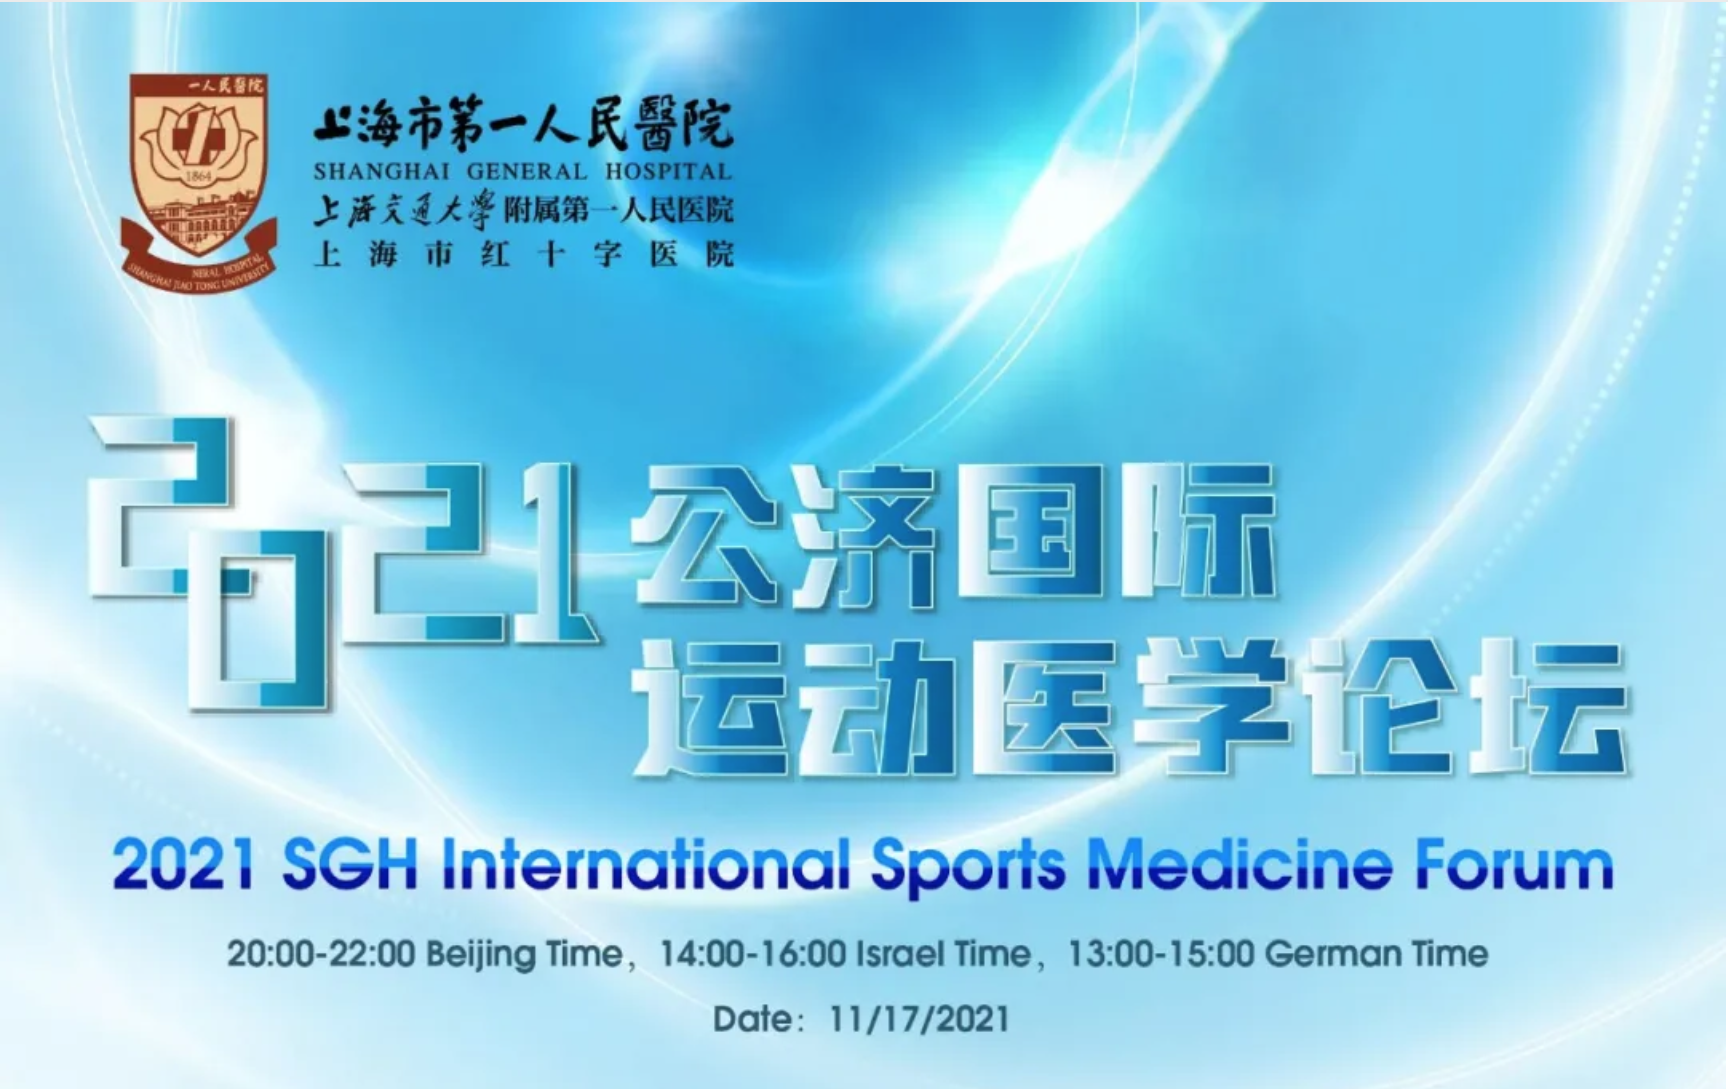 2021 SGH International Forum for Sports Medicine